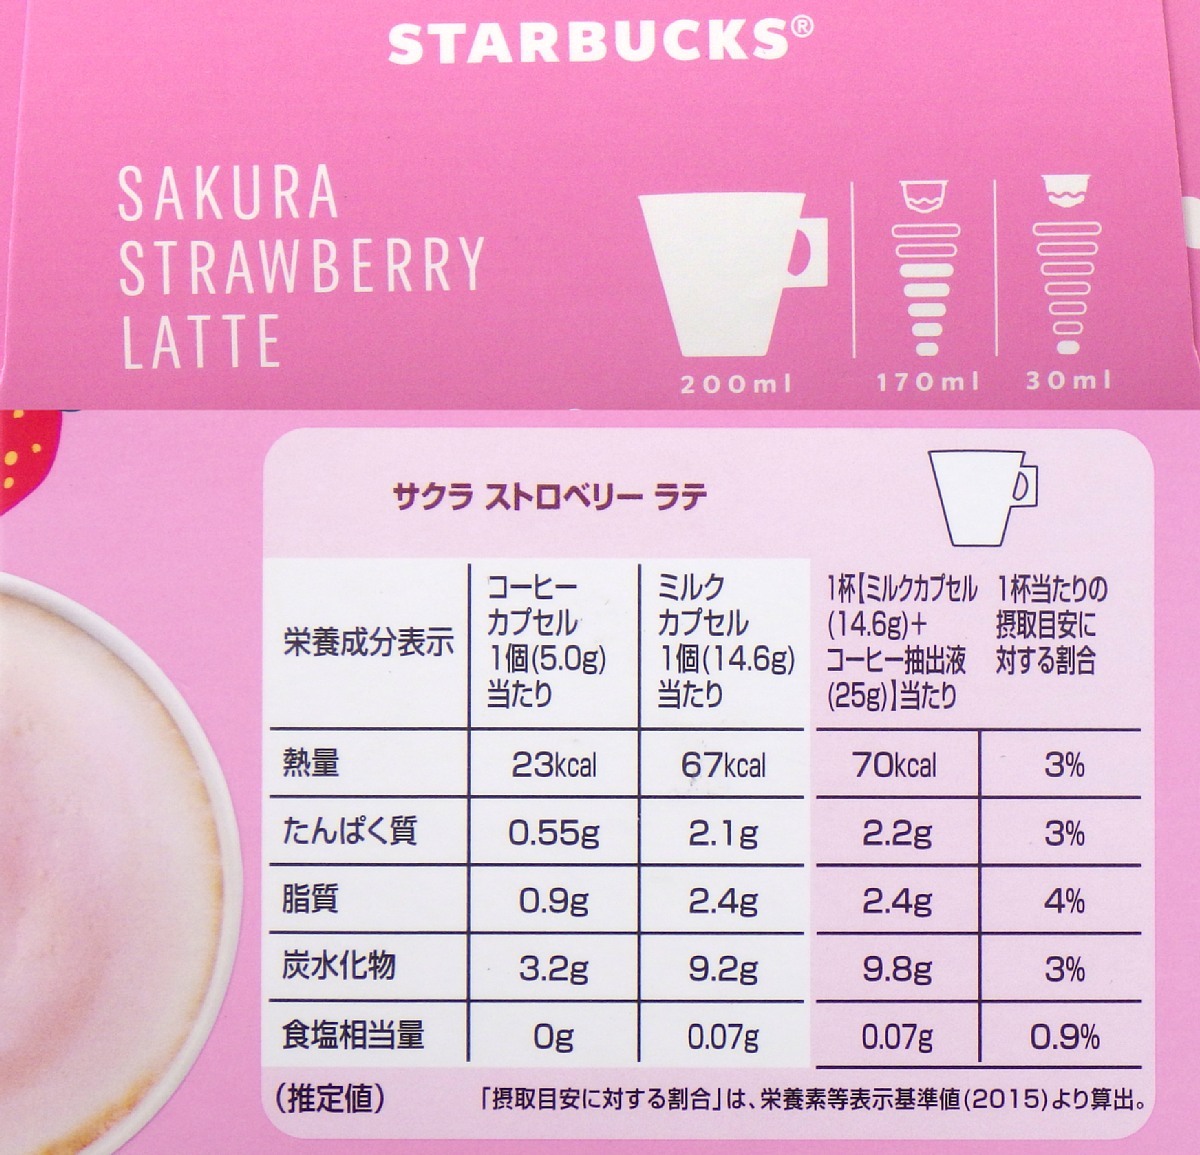  new goods unopened nes Cafe Dolce Gusto coffee Capsule Starbucks 24 cup Sakura strawberry / powdered green tea Latte pie k Play s roast to